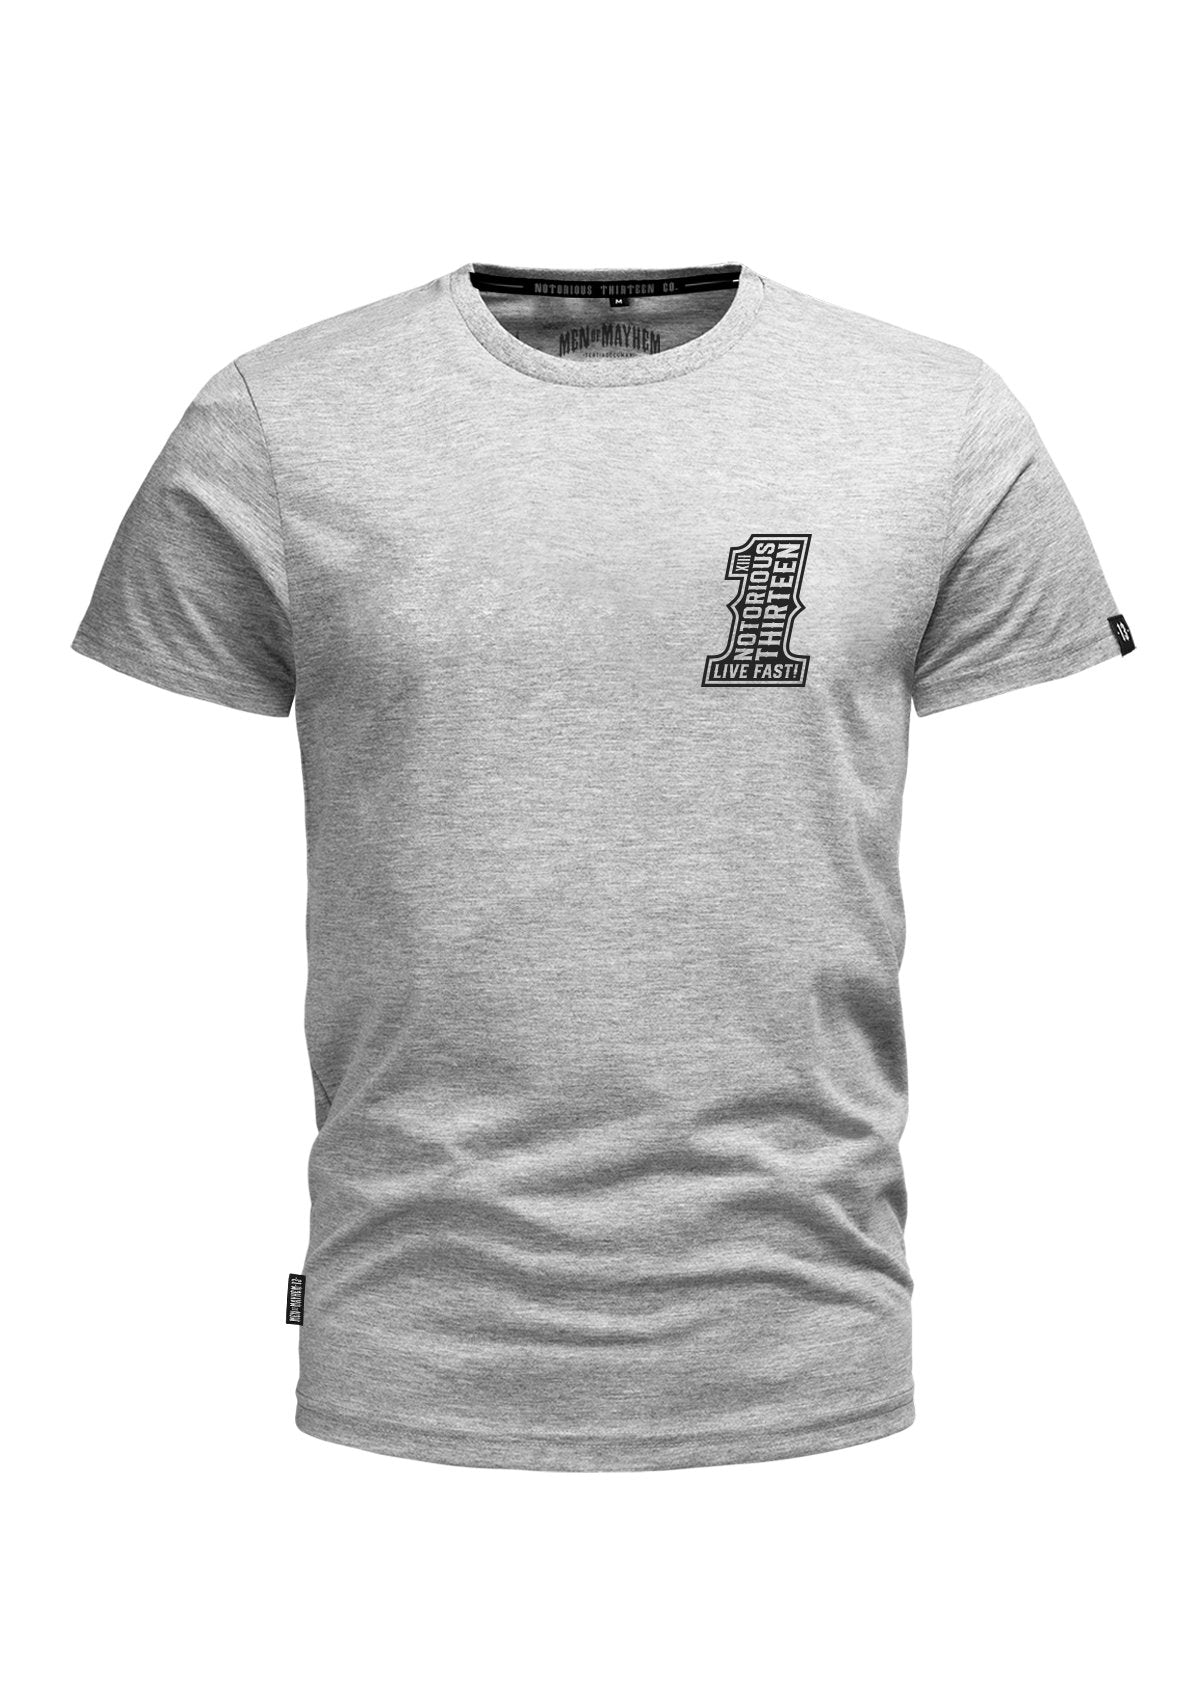 T-Shirt ONE G/S - MEN OF MAYHEM - ALAIKO-EXCHANGES-MM-M-1010-TO-GS - Grau - Men